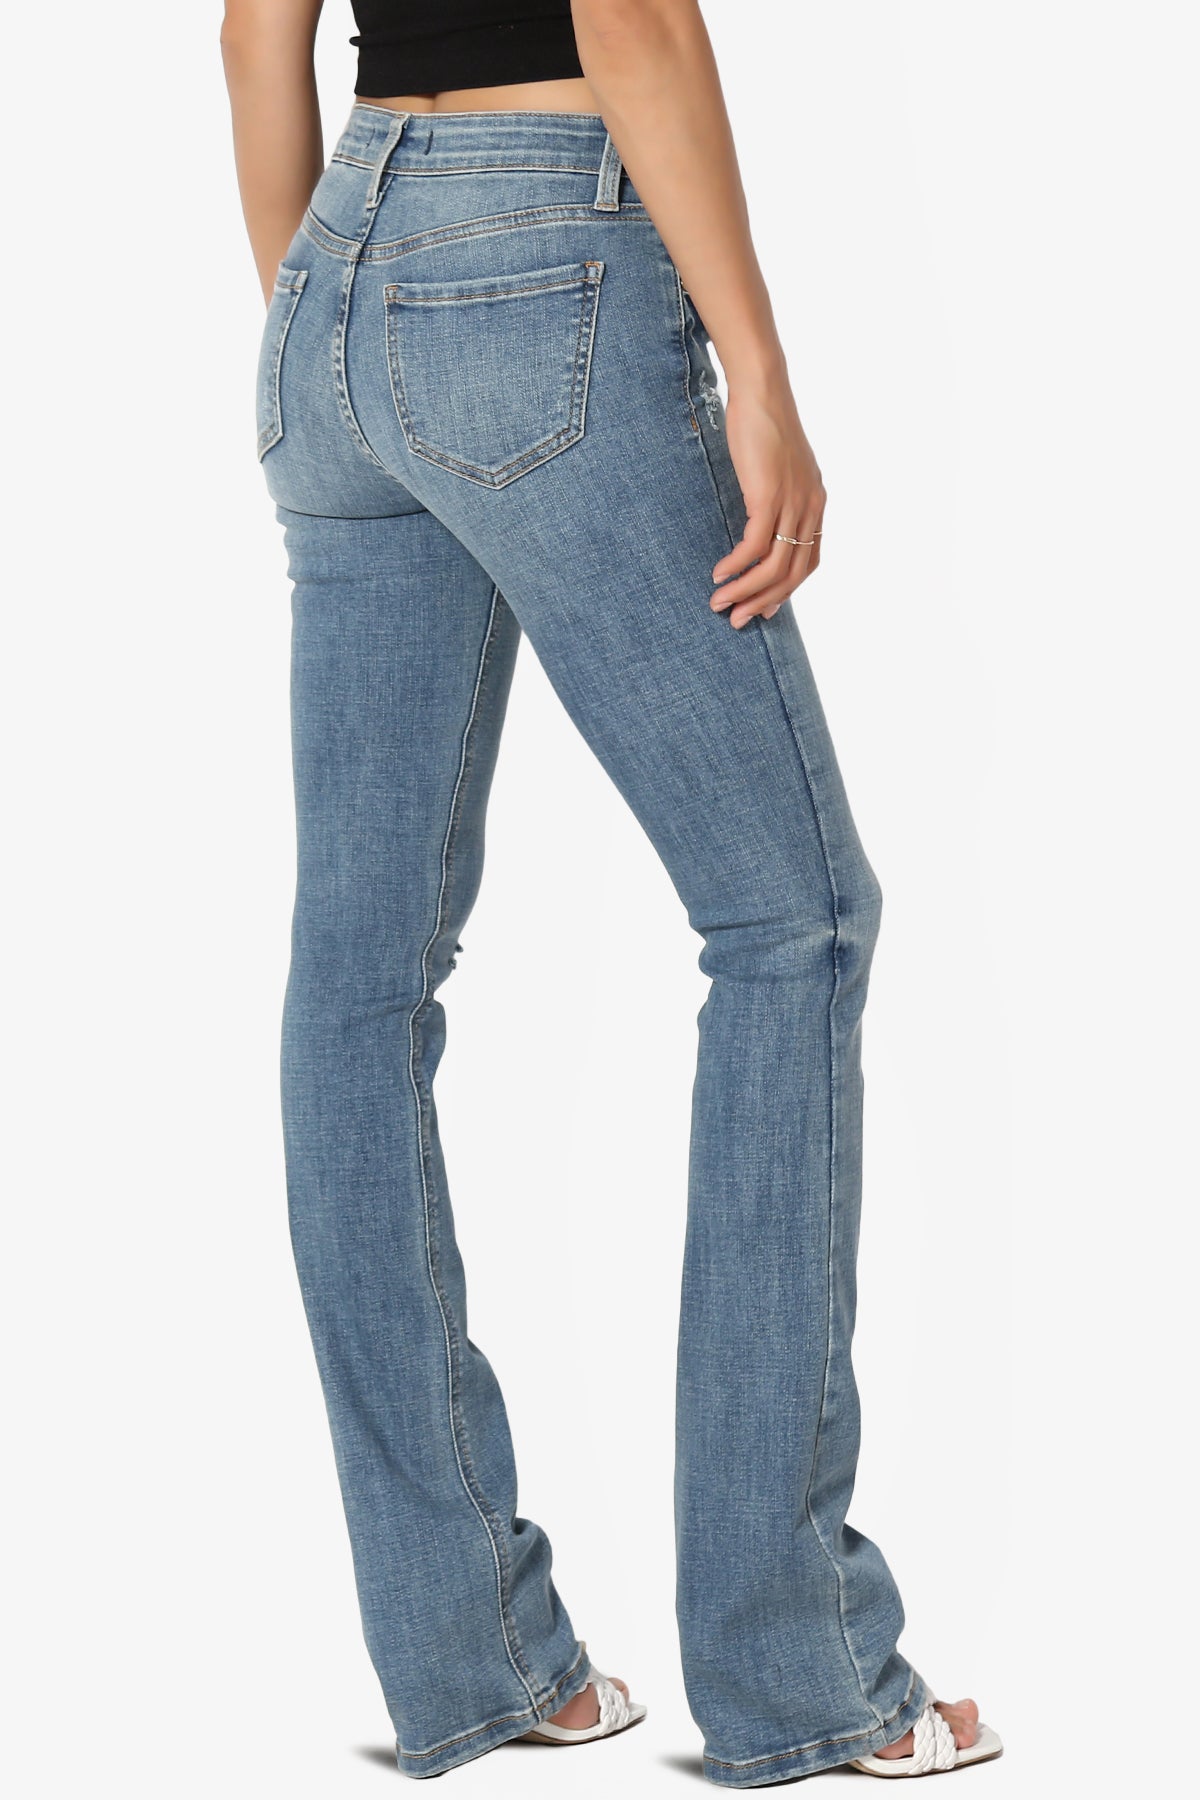 Imogen Mid Rise Bootcut Jeans in Wild Medium